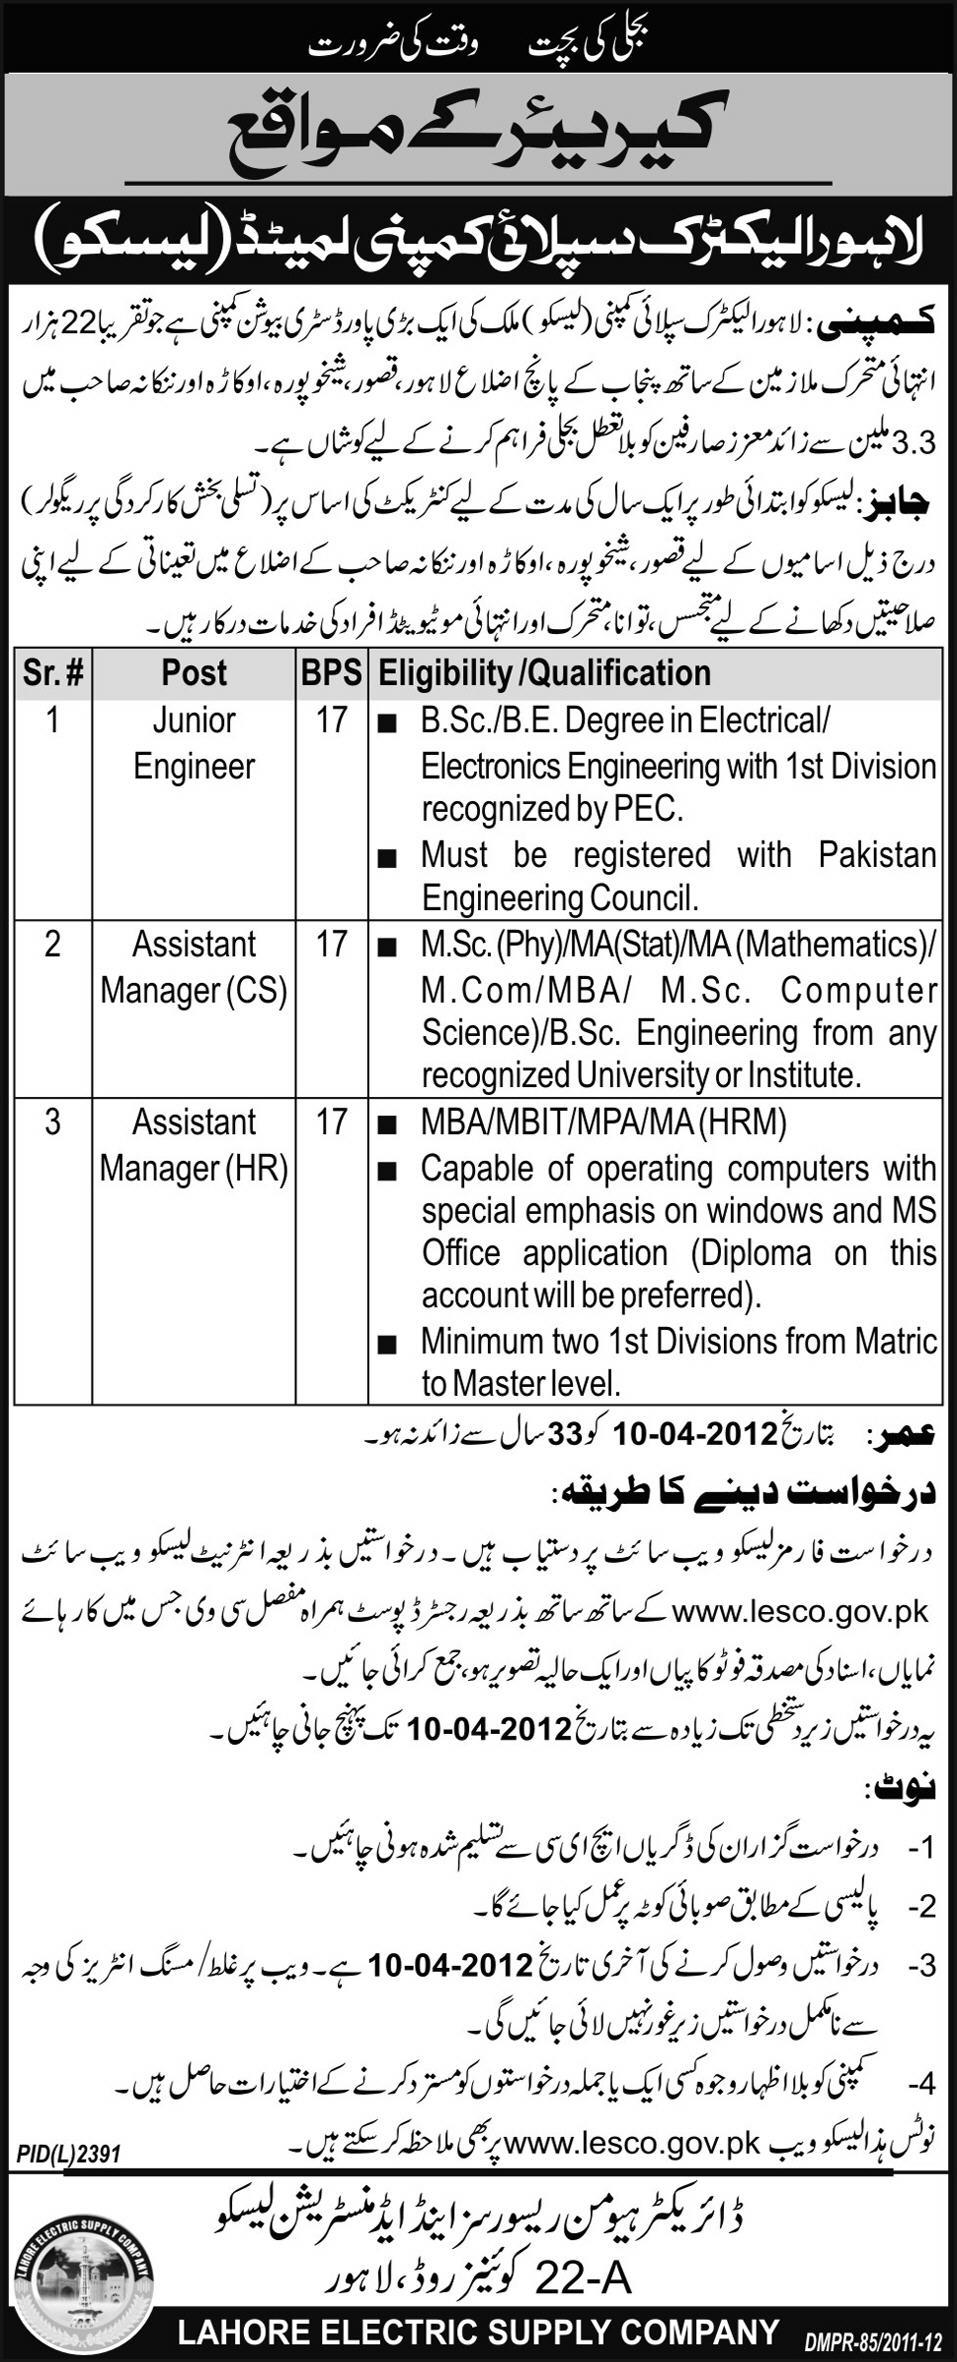 LESCO (Lahore Electric Supply Company) Govt Jobs